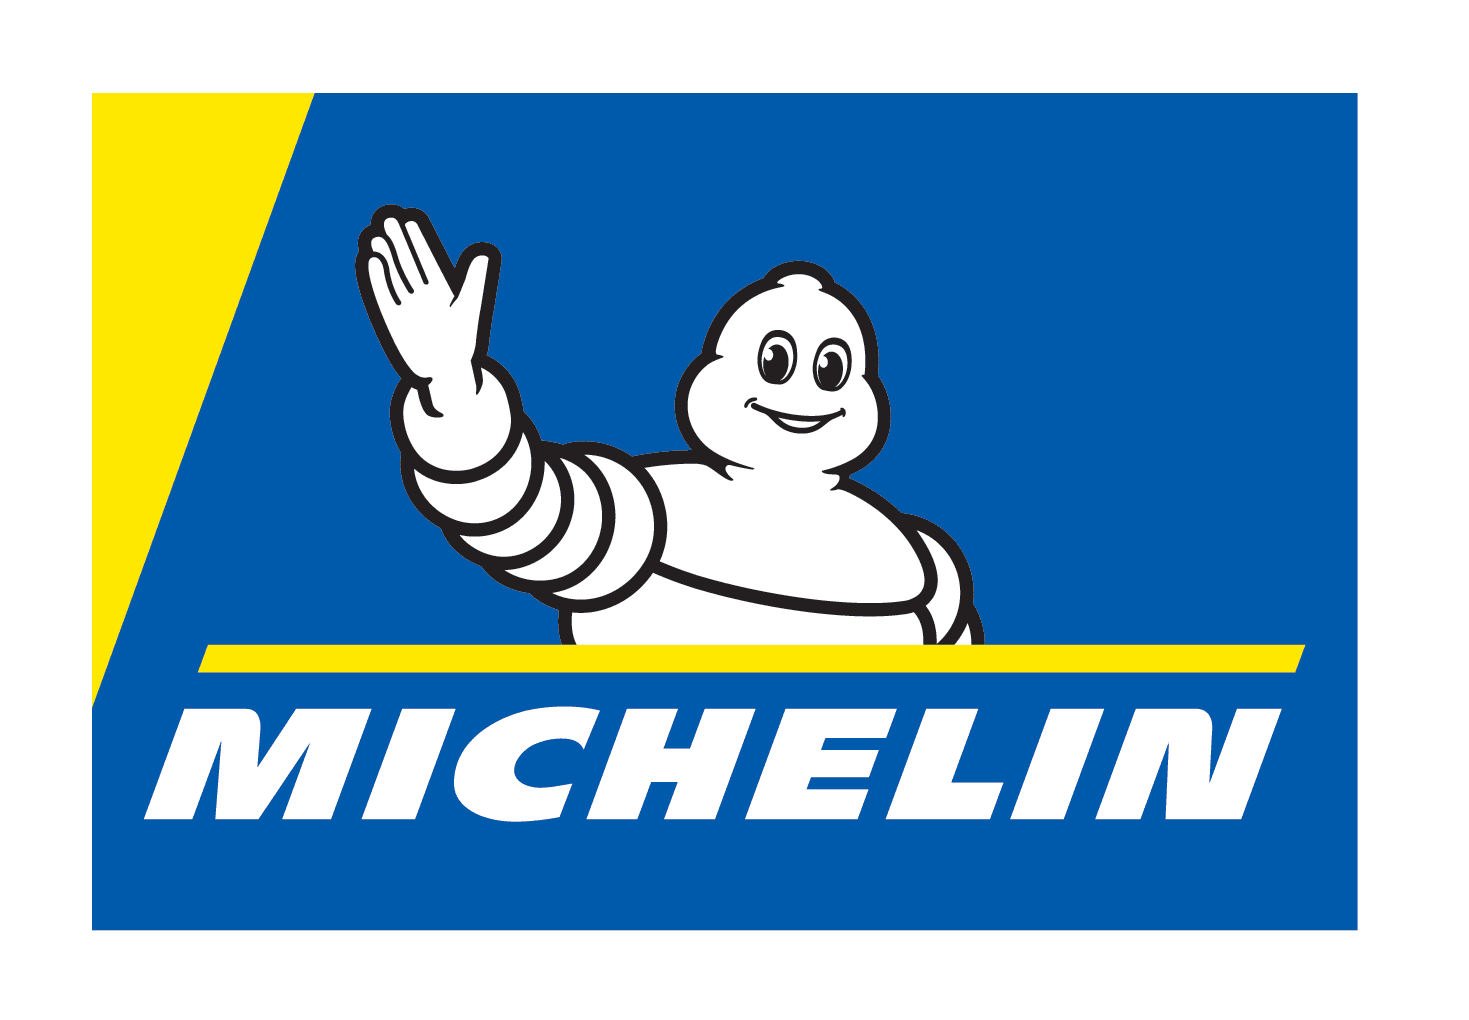 Michelin Racing USA